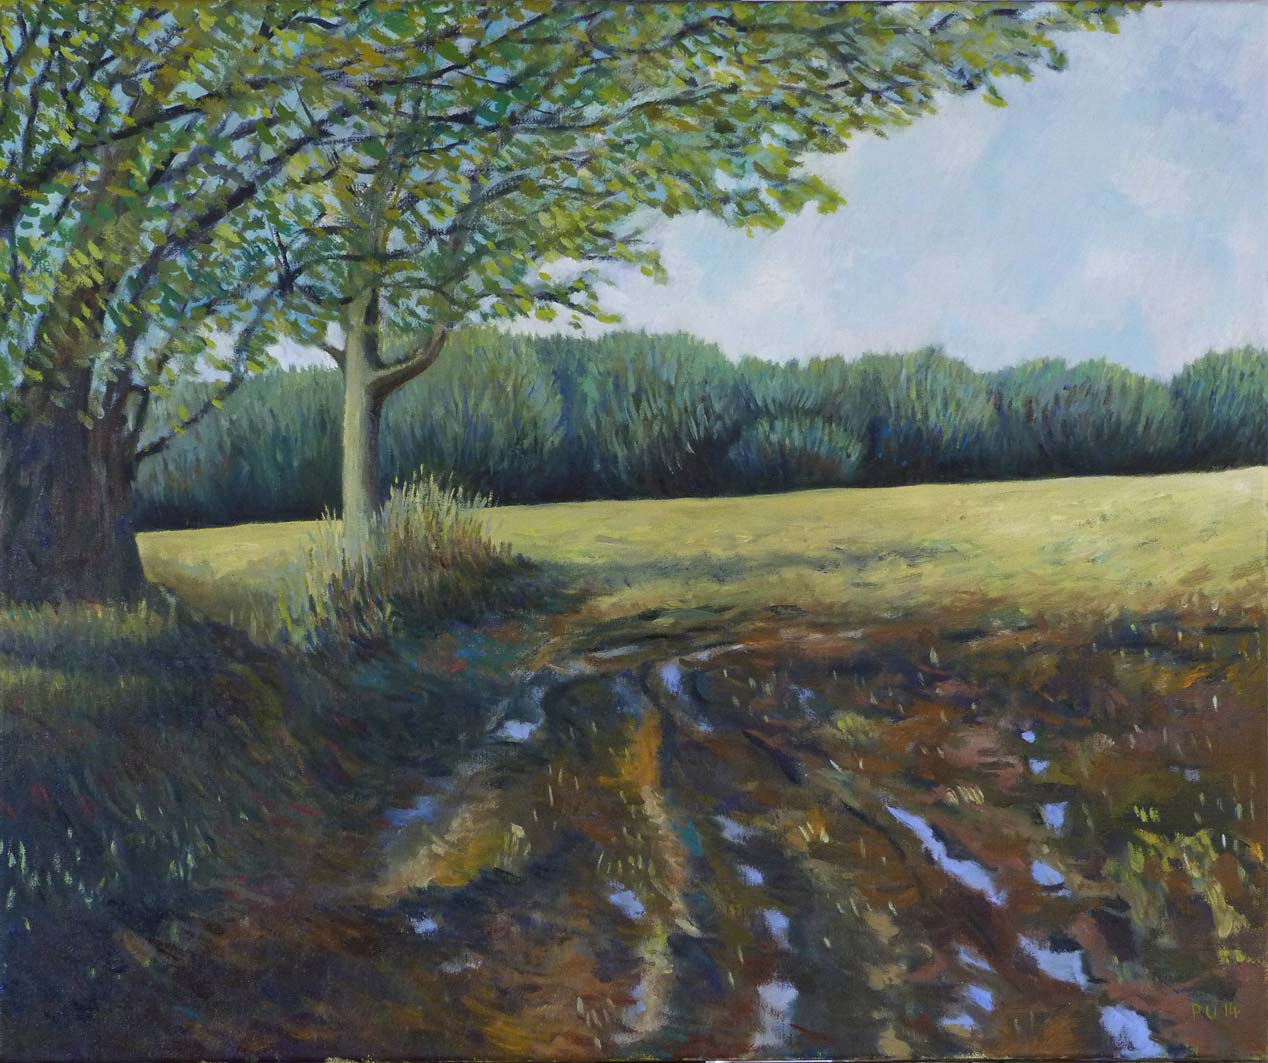 Muddy Field, oil on canvas, 50x60cm